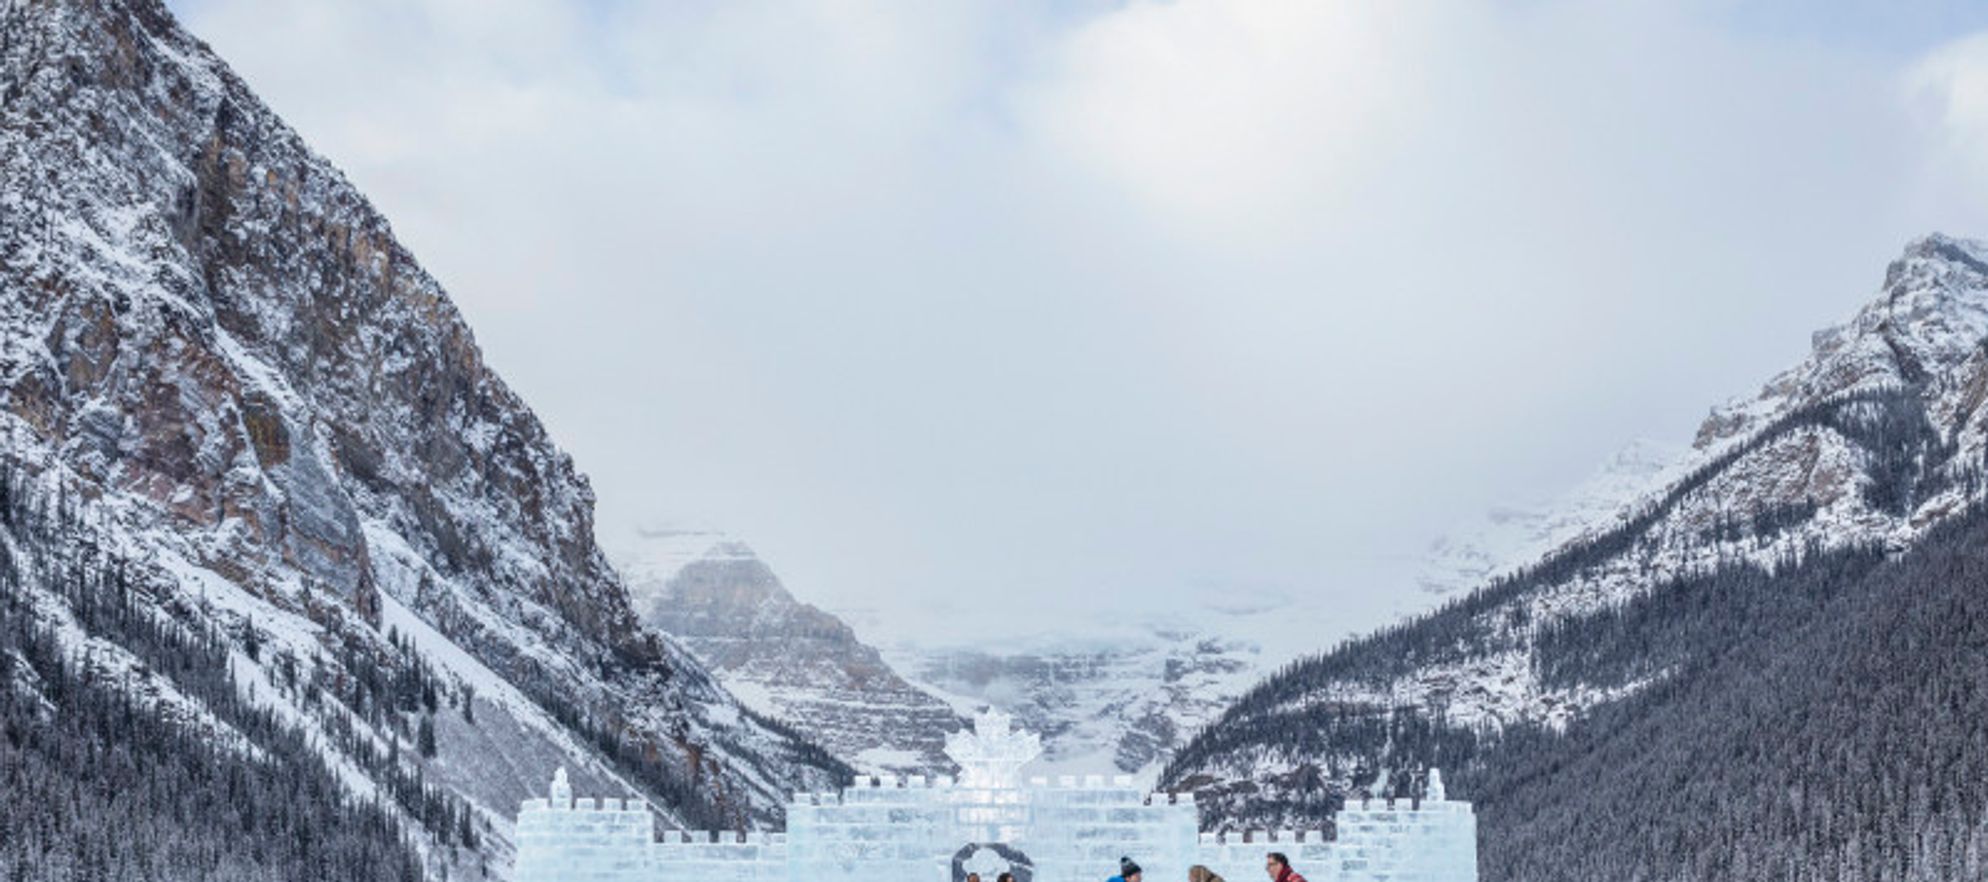 Chateau Ski & Snow